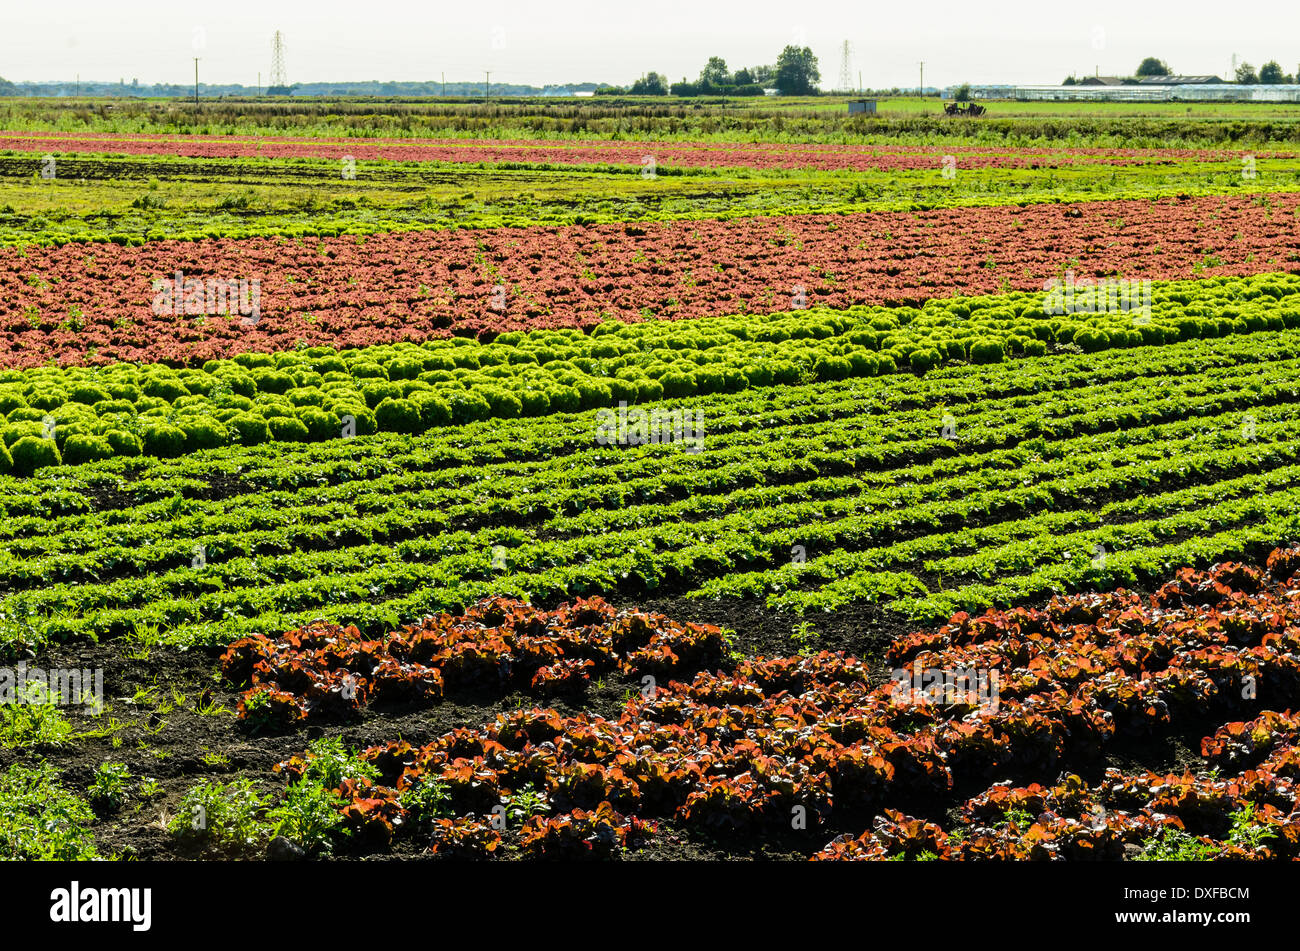 Salad crops growing in fields near Tarleton in West Lancashire Stock Photo